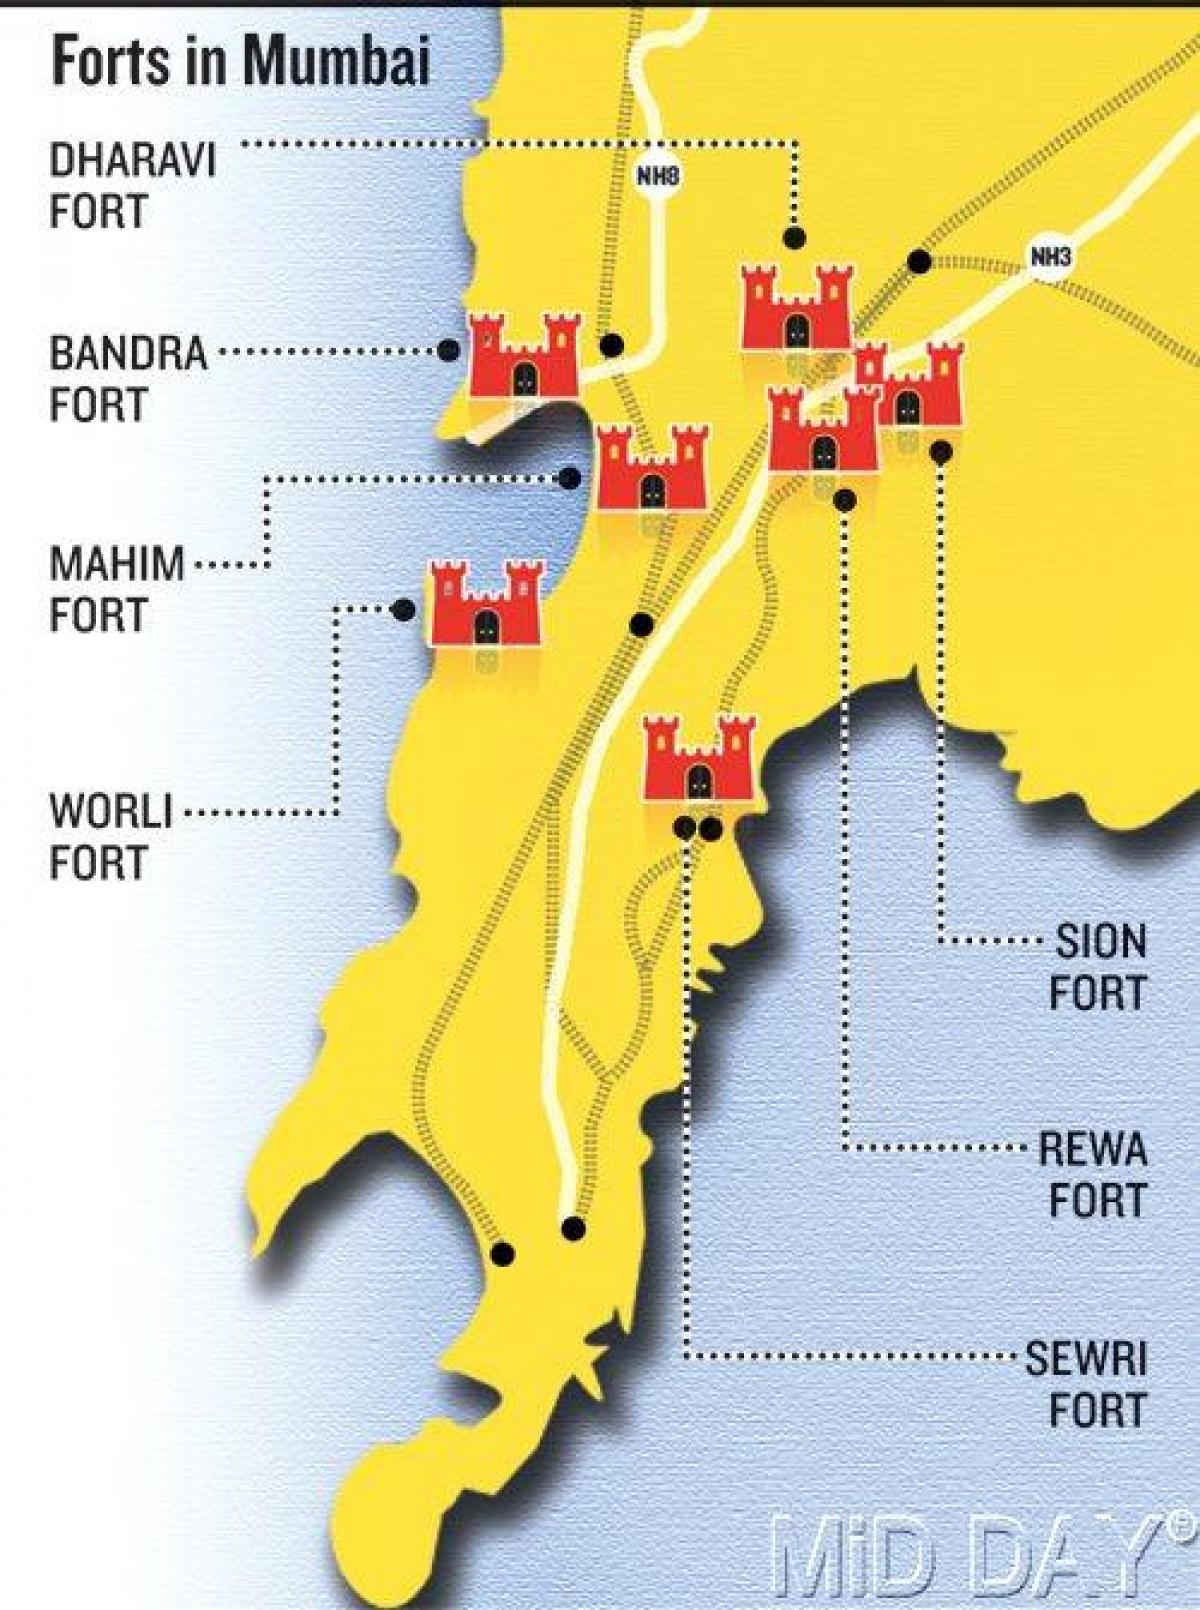 Mumbai fort area map